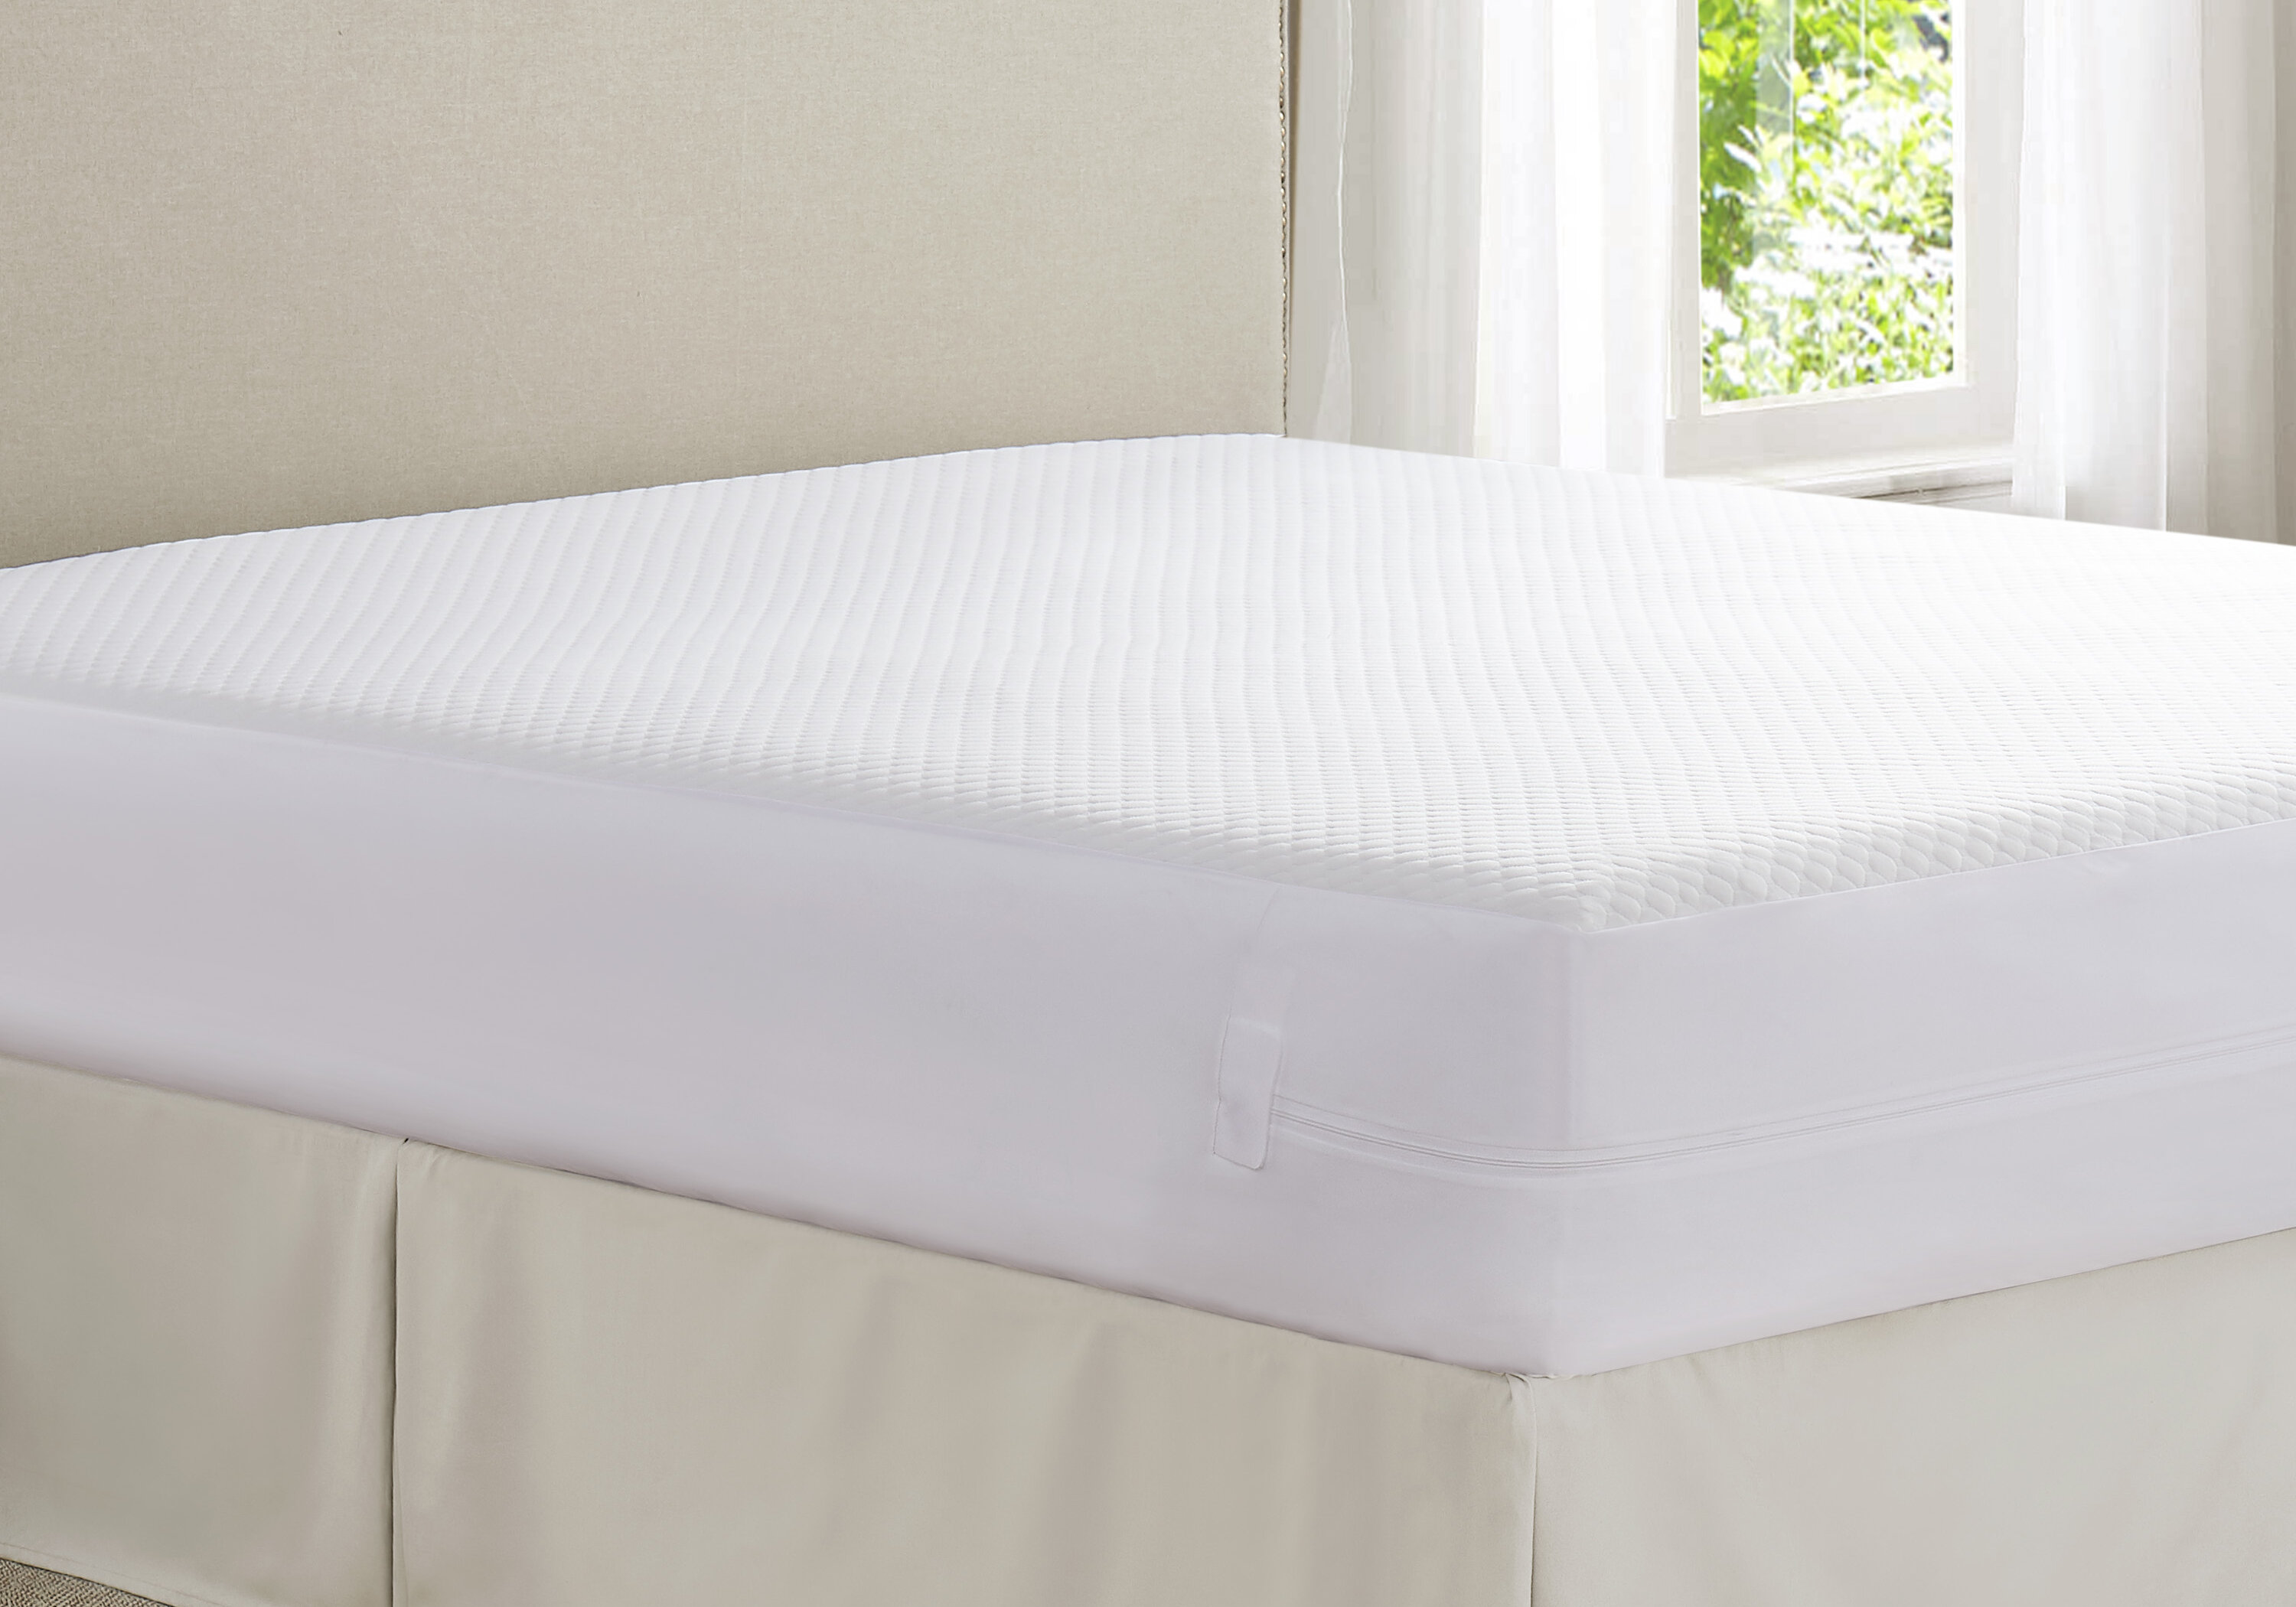 Bed Bug Mattress Protector Queen Size Cover Guard Memory Foam Waterproof Sheets